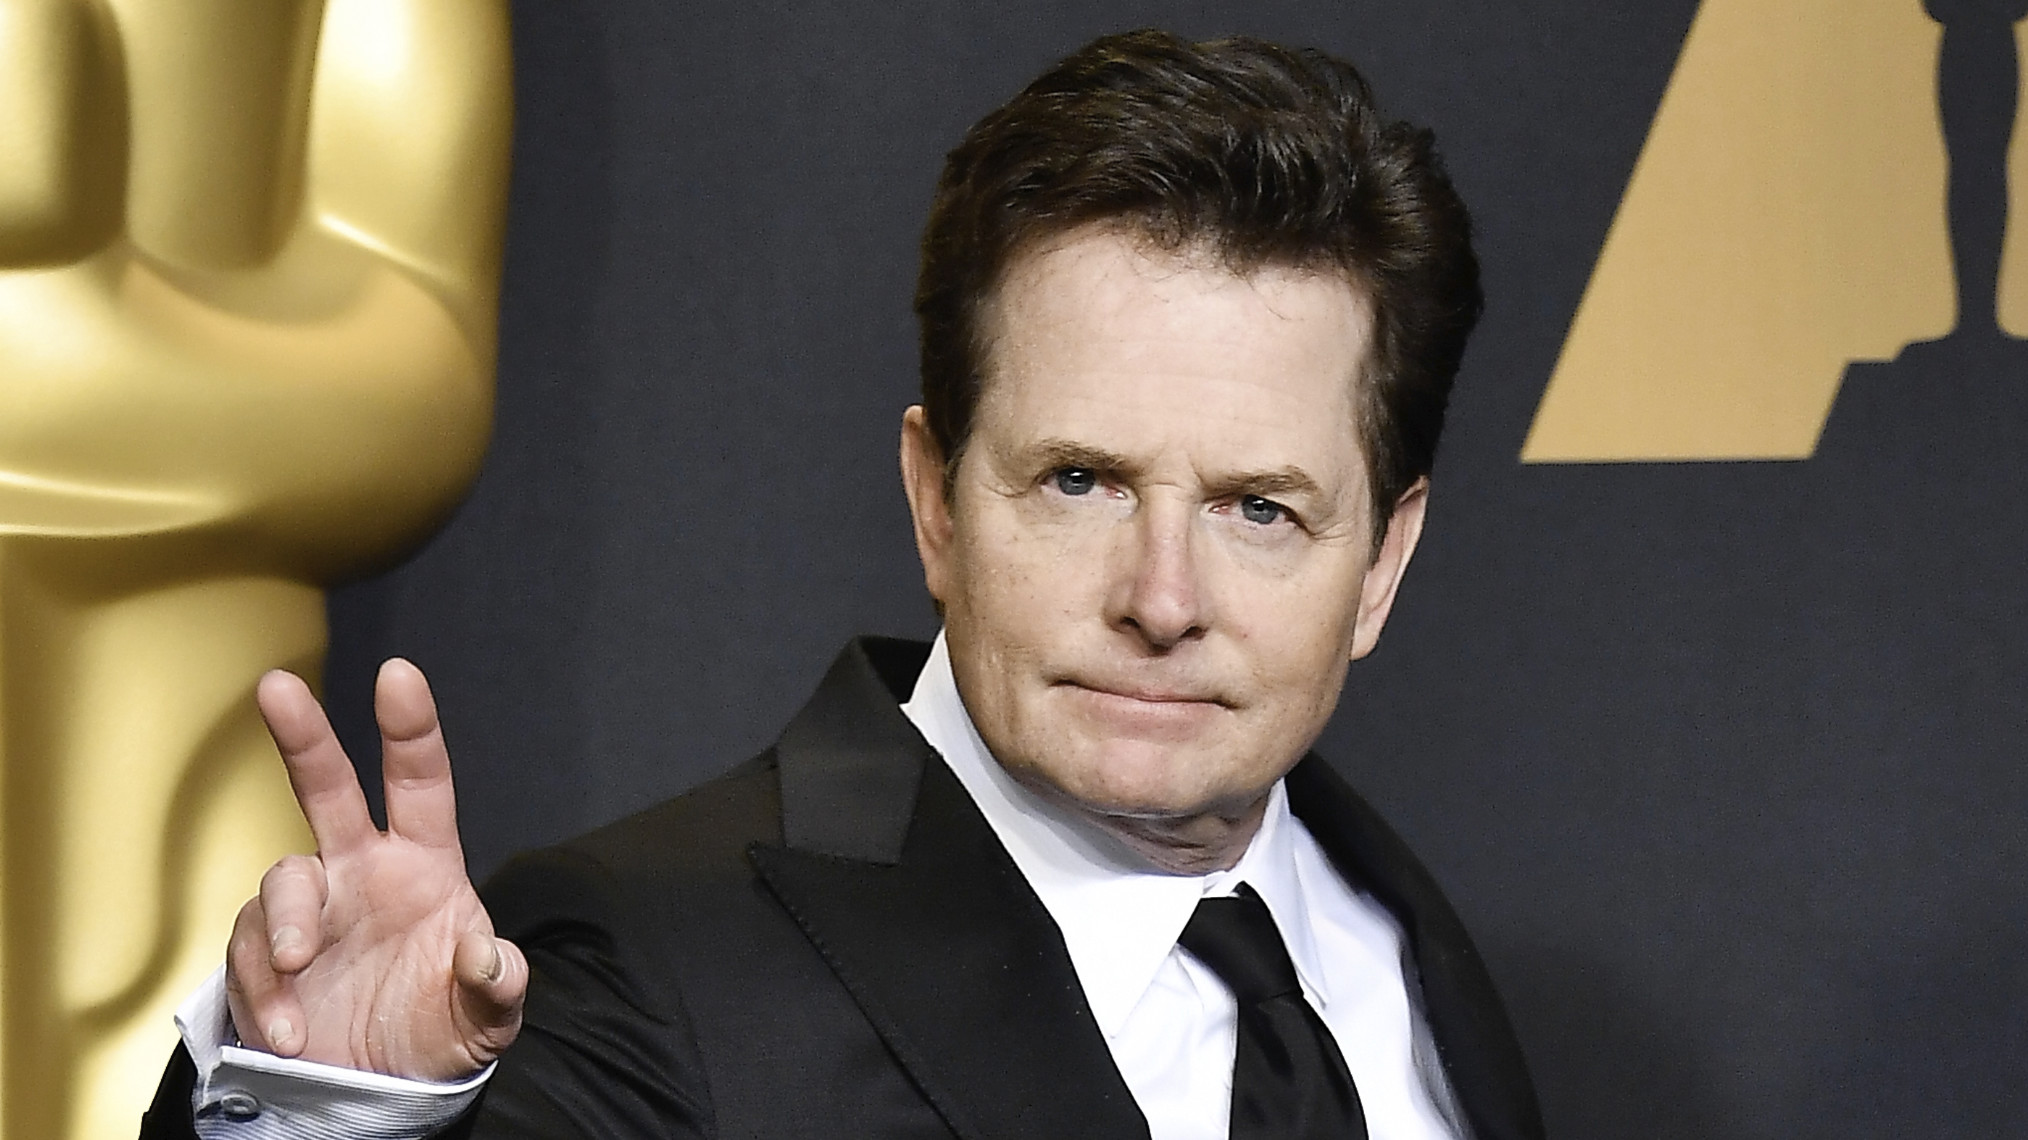 Michael J Fox Actor Activist Producer 